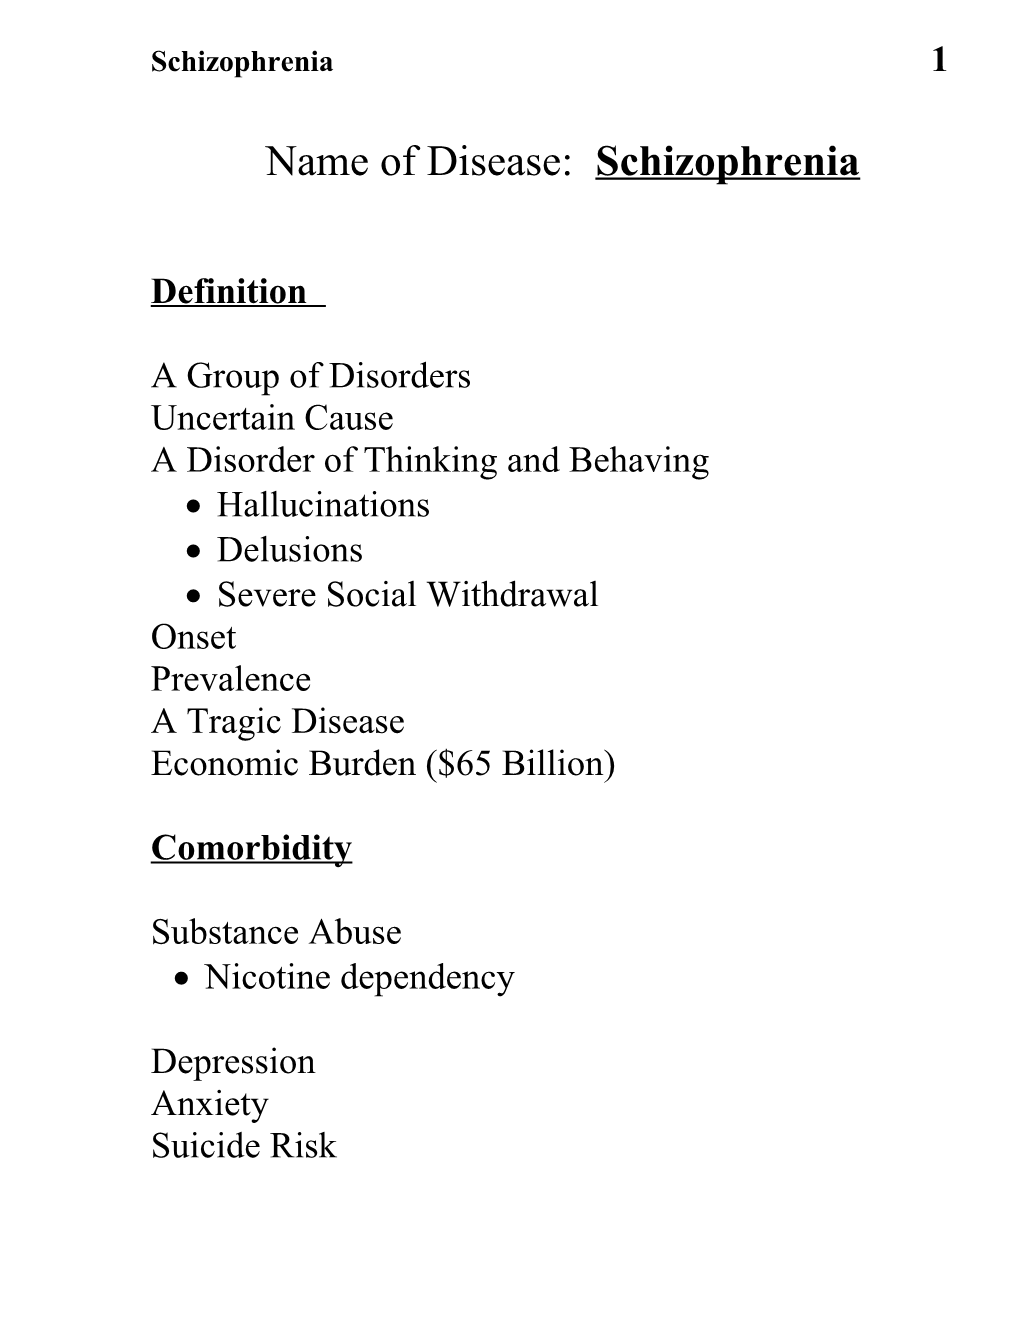 Name of Disease: Schizophrenia